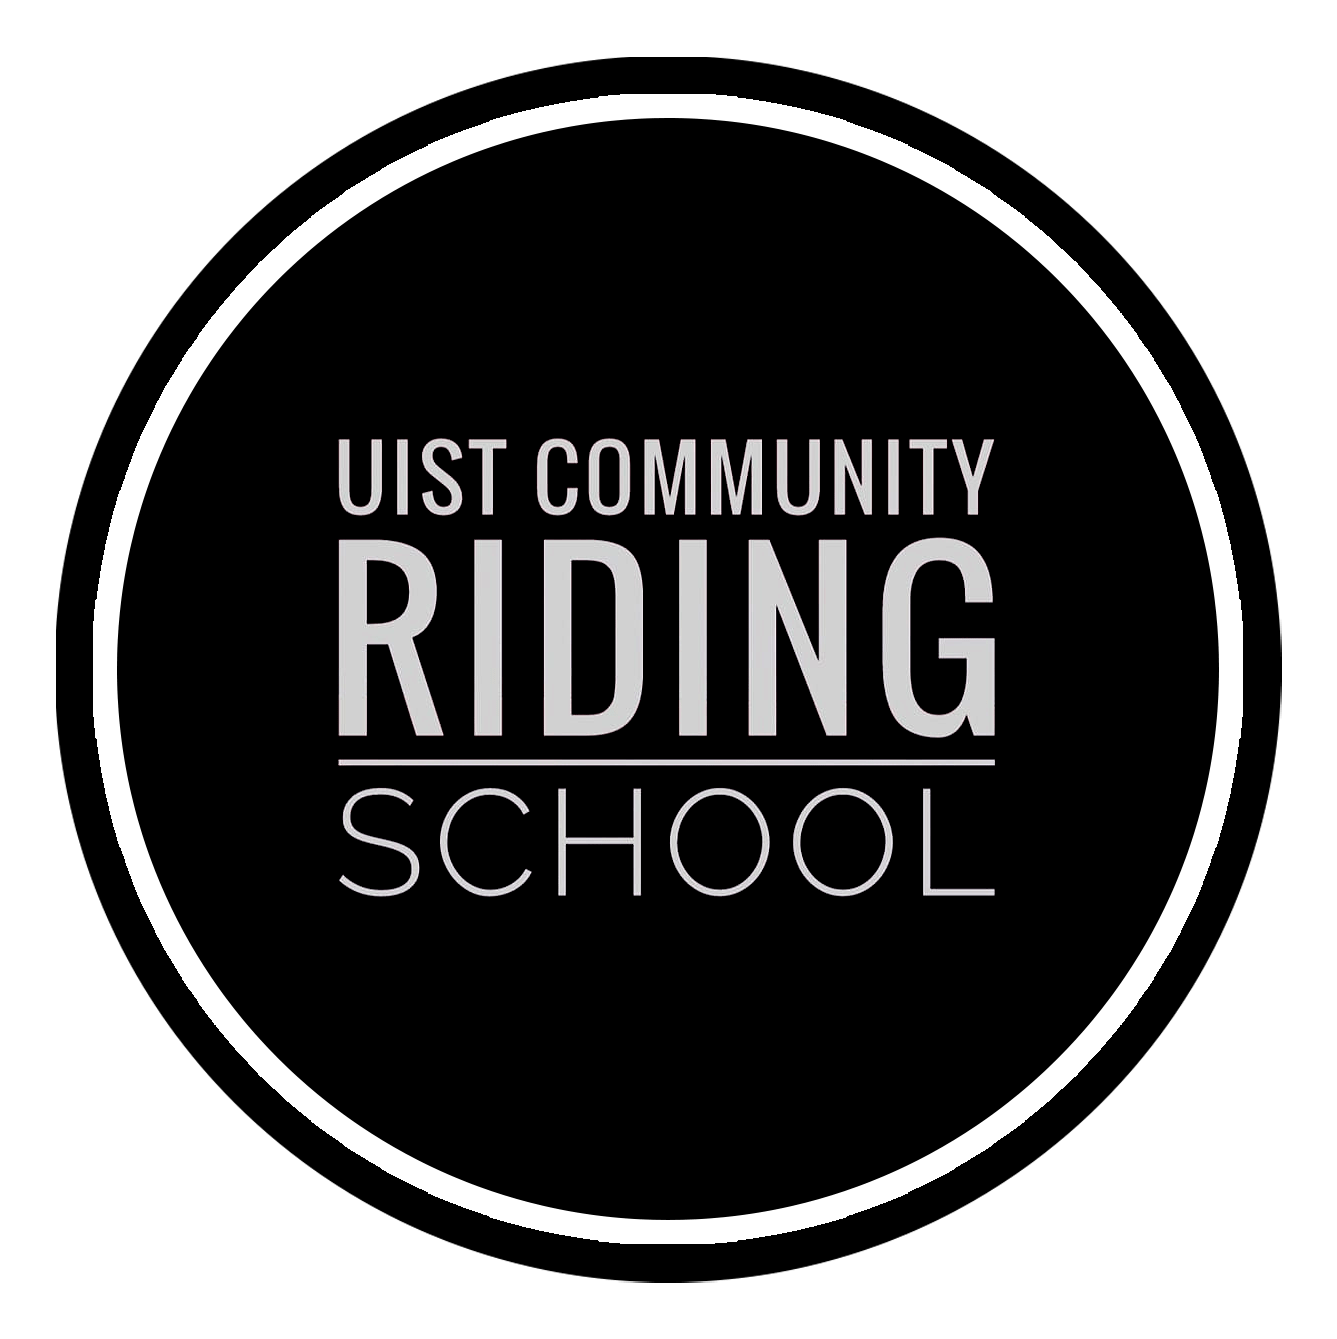 Uist Community Riding School logo